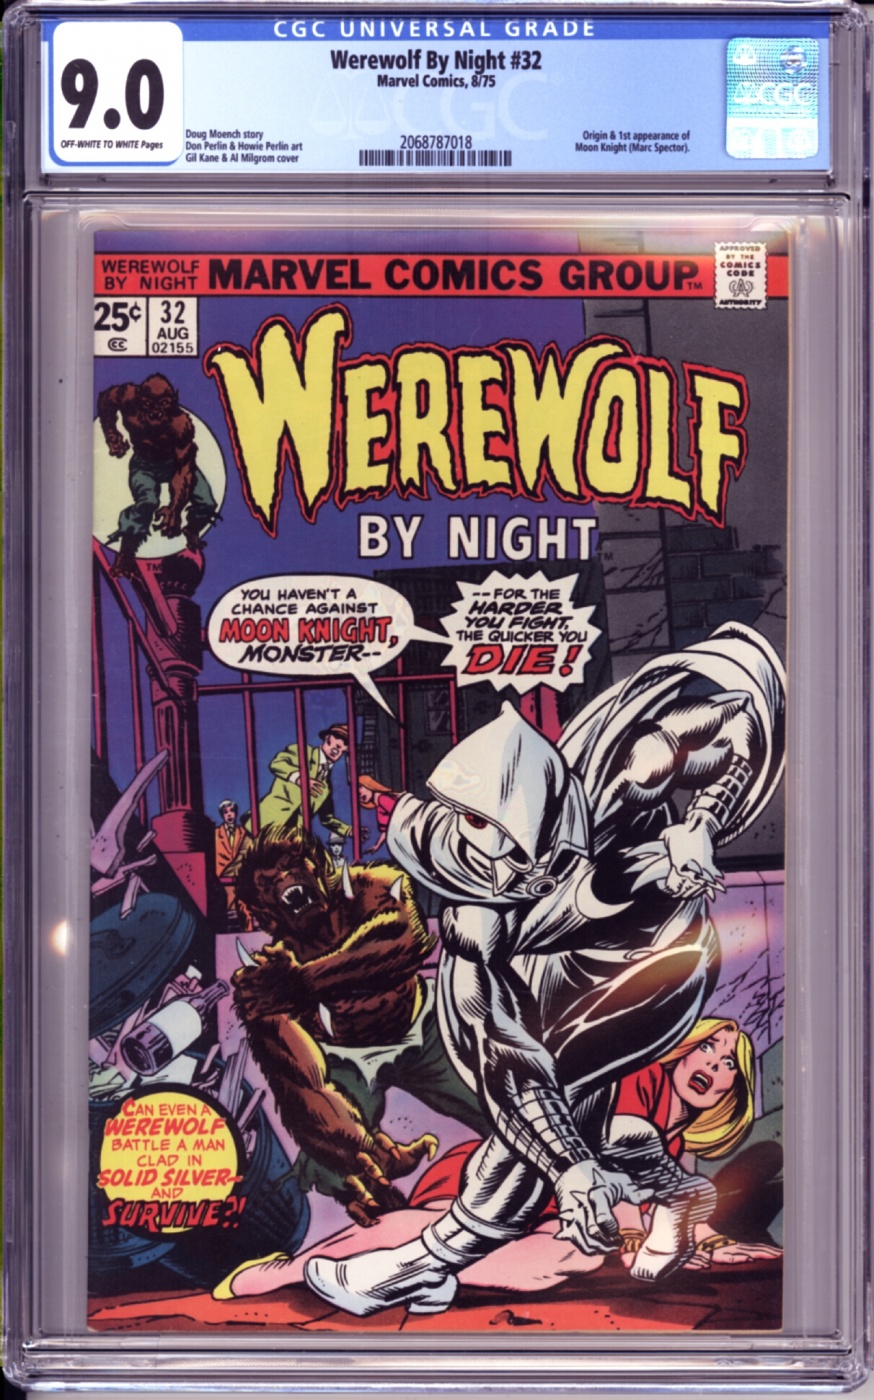 Werewolf by Moon Knight